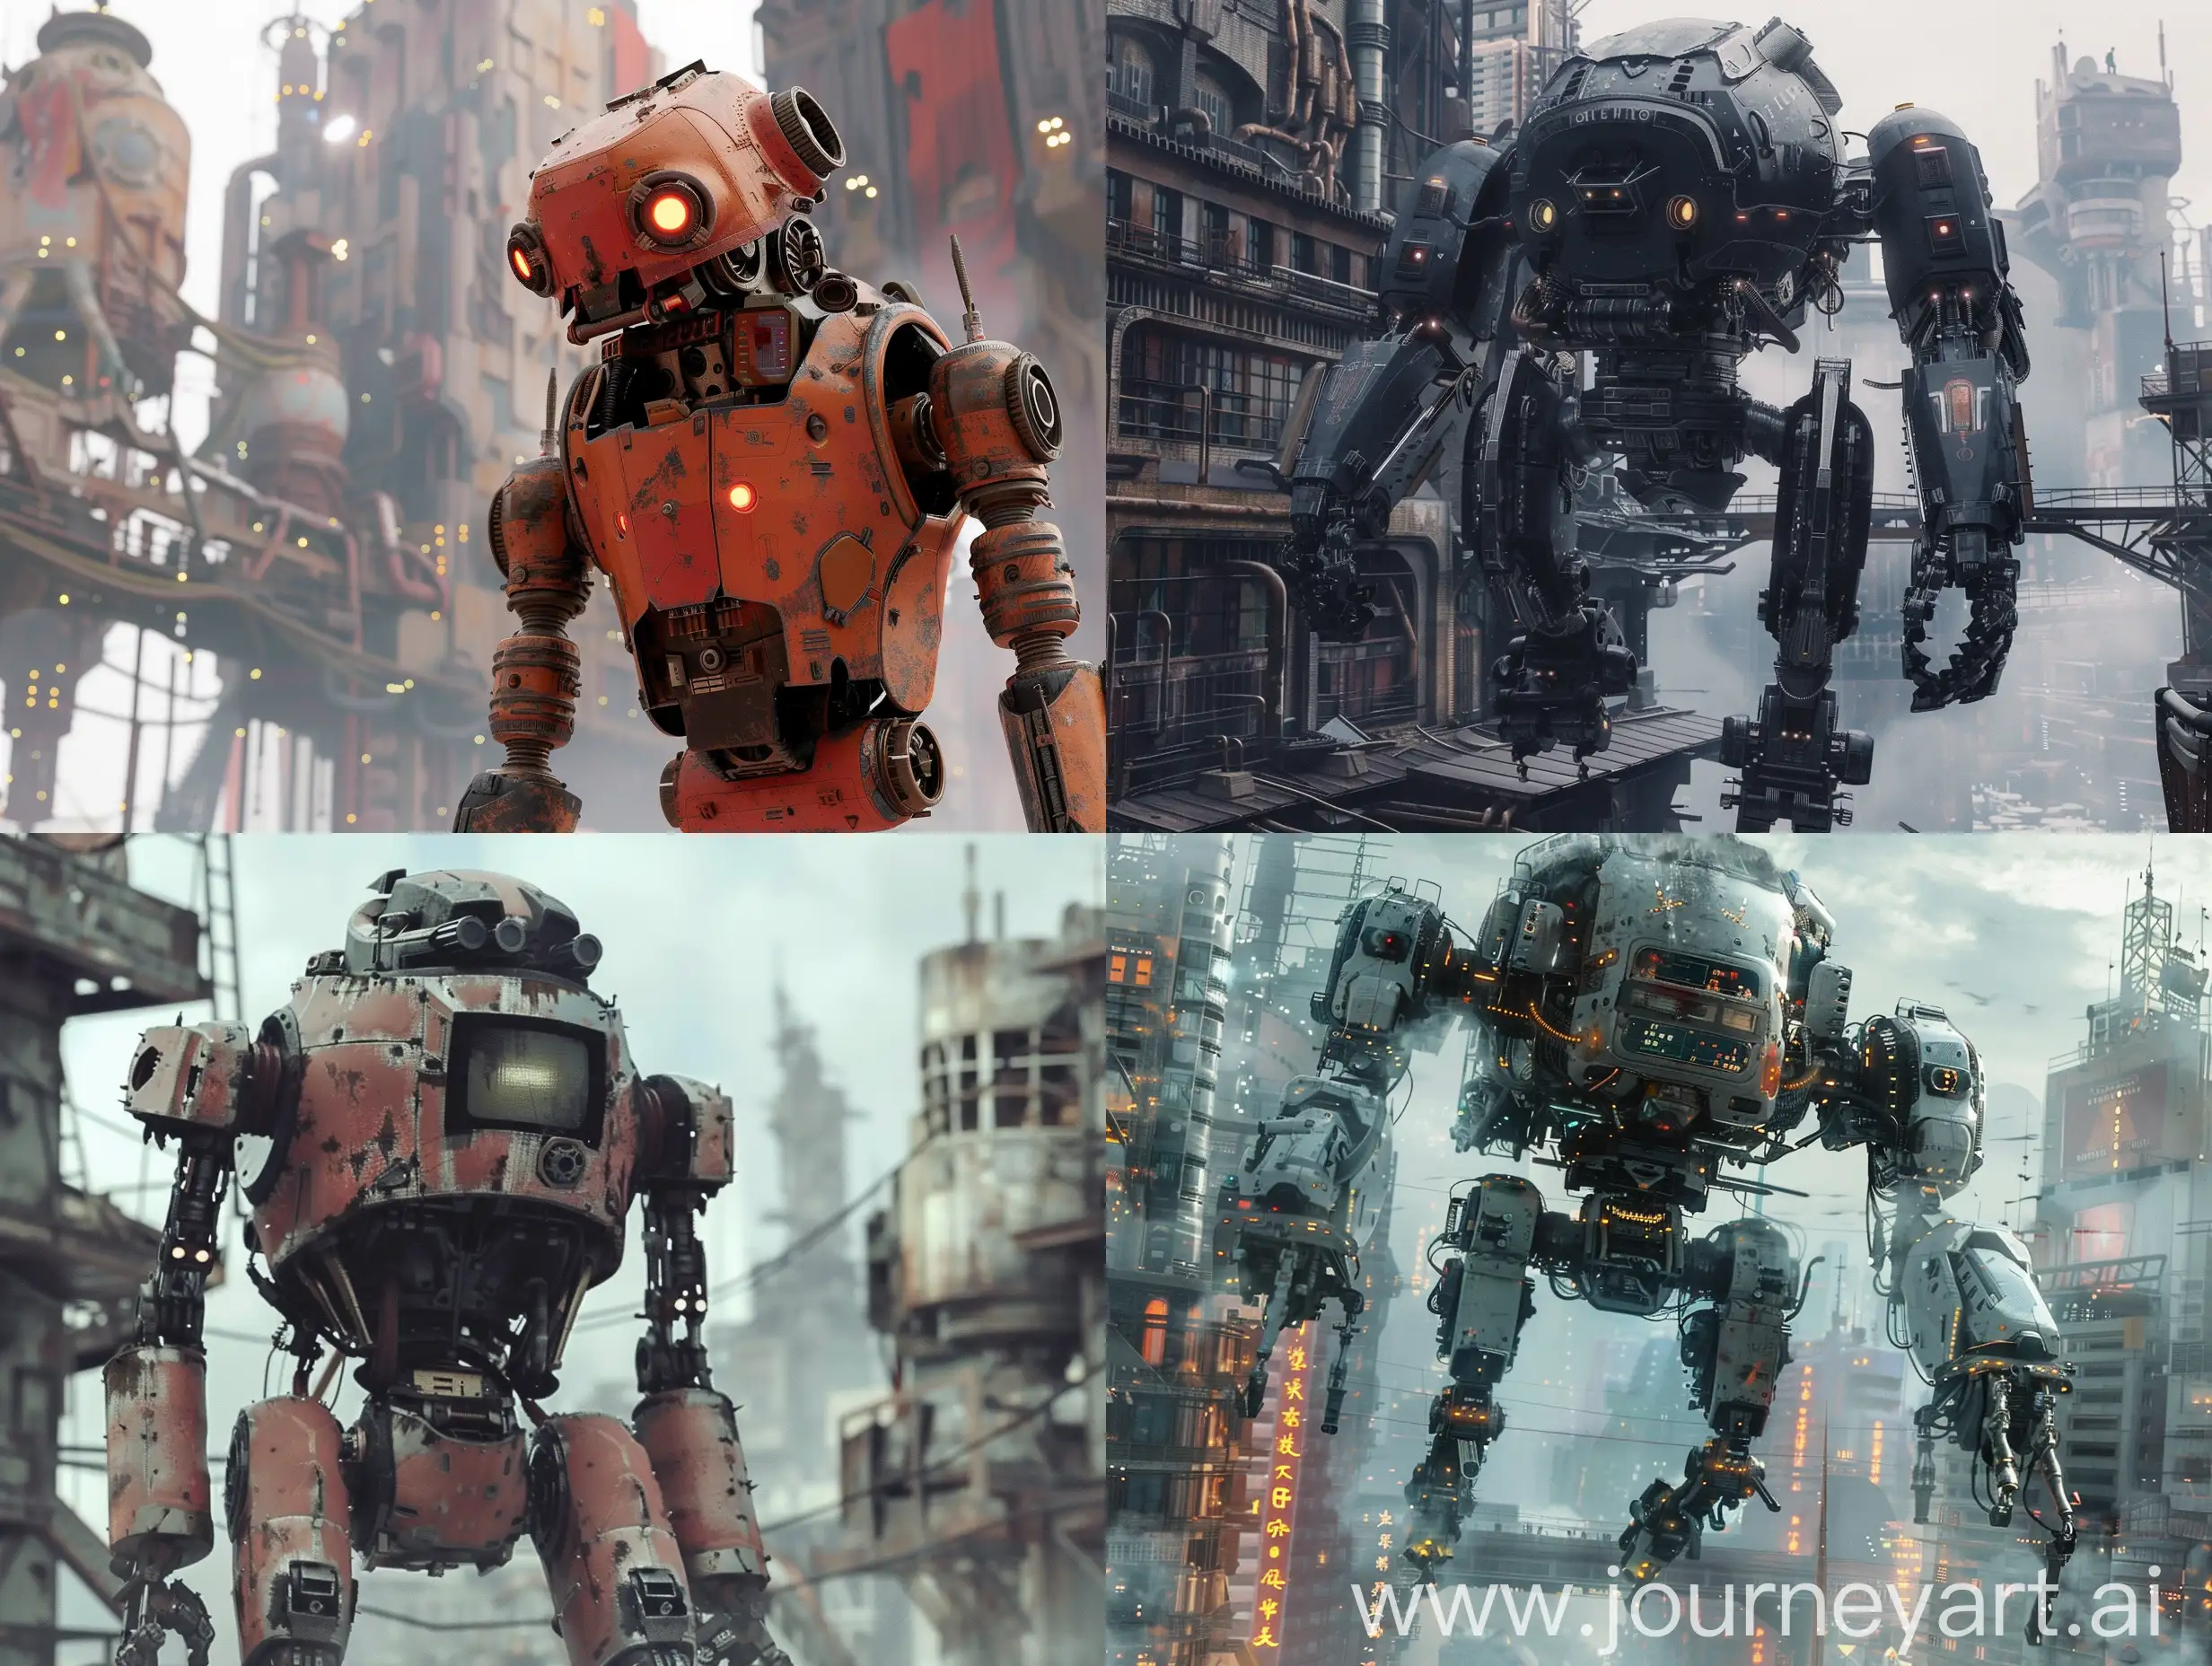 realistic cinematic futuristic steampunk robot
in a distopian mech city world